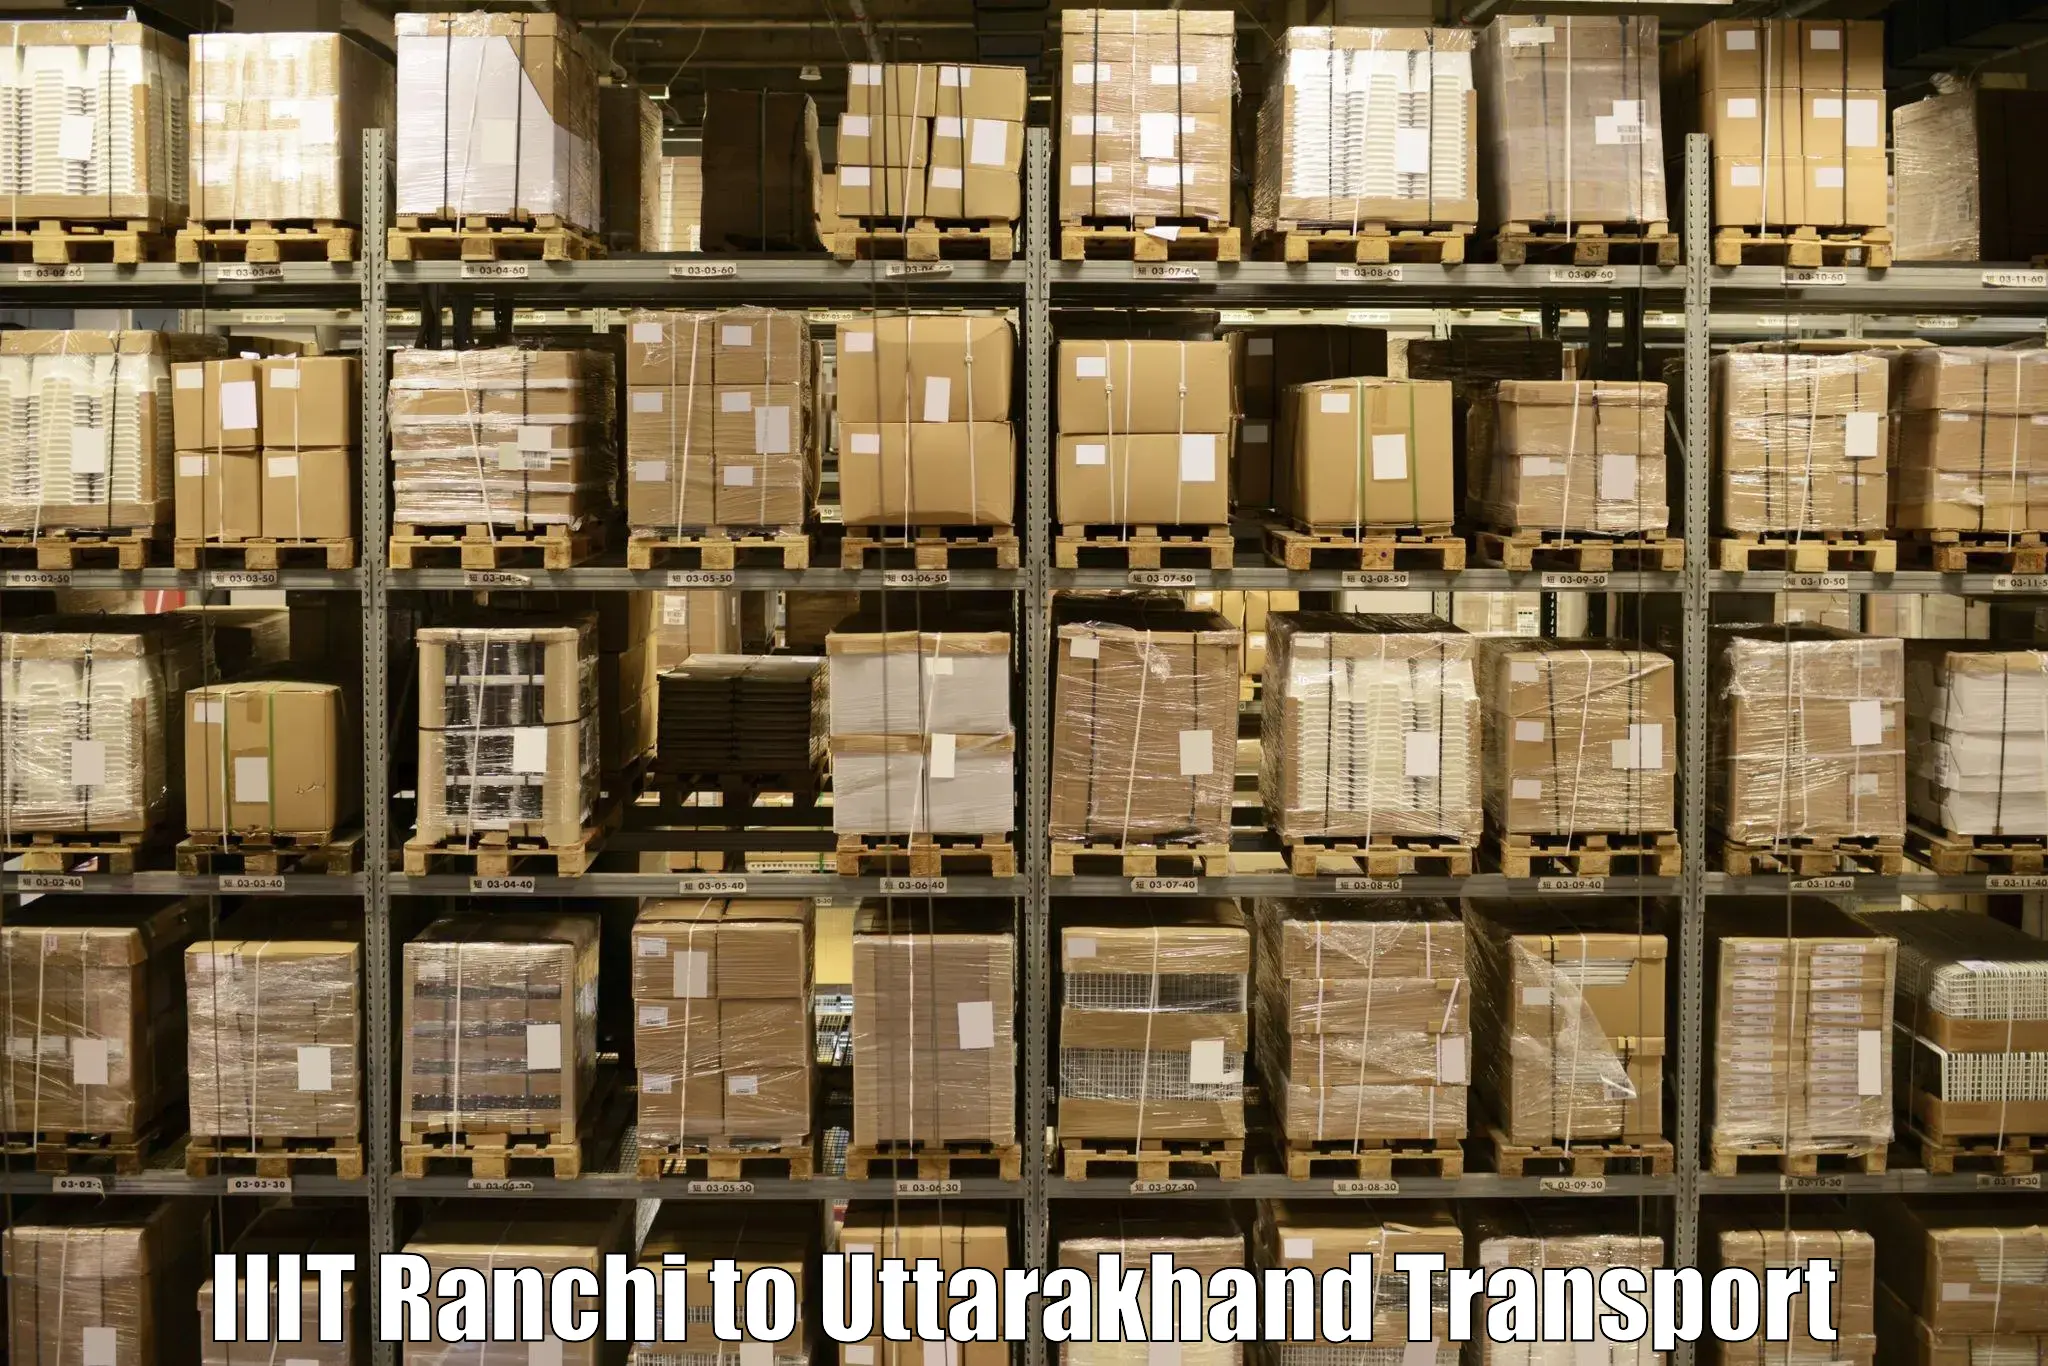 Delivery service IIIT Ranchi to Uttarakhand